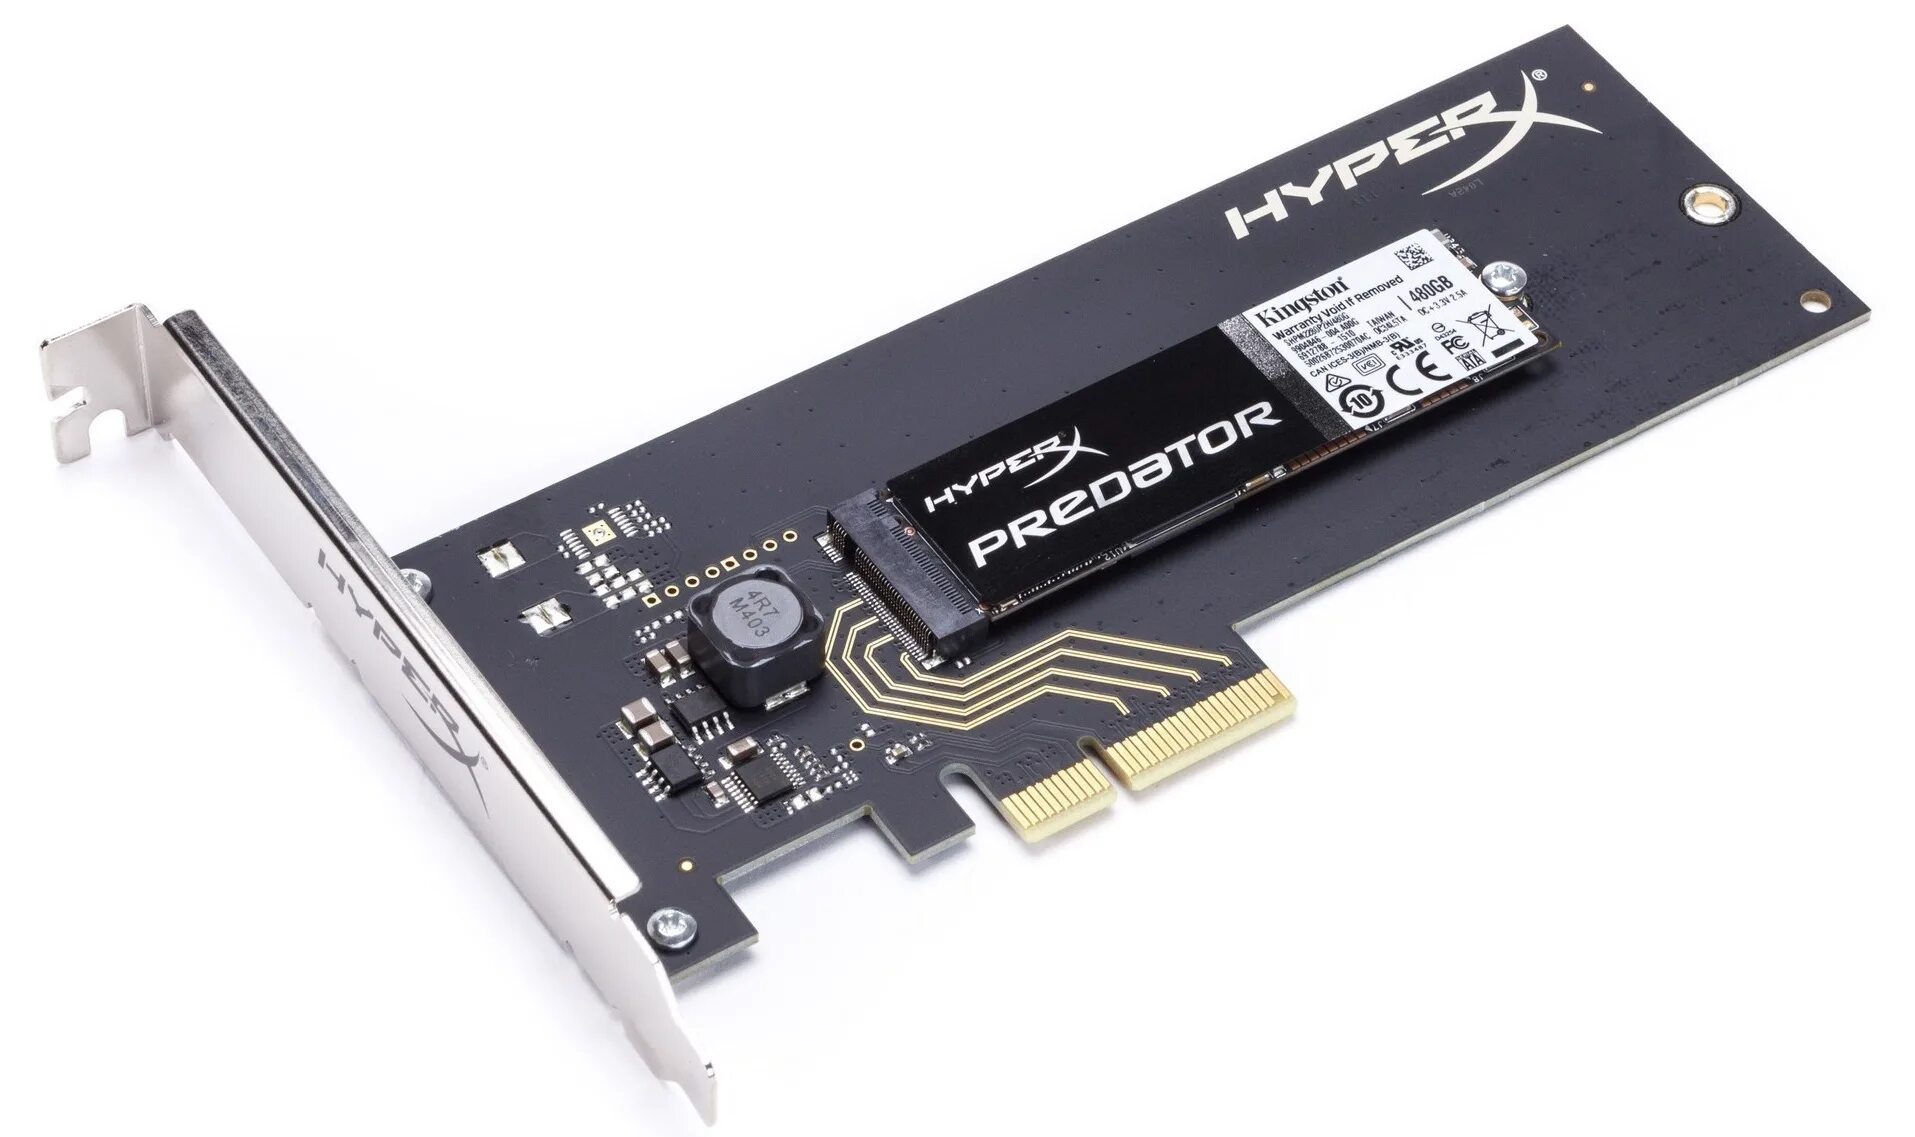 Pci e x1 ssd. SSD PCI-Express 5.0. Kingston HYPERX Predator (shpm2280p2h/480g), 480 Гбайт. М2 PCI Express накопитель. SSD диск для PCI-ex1.